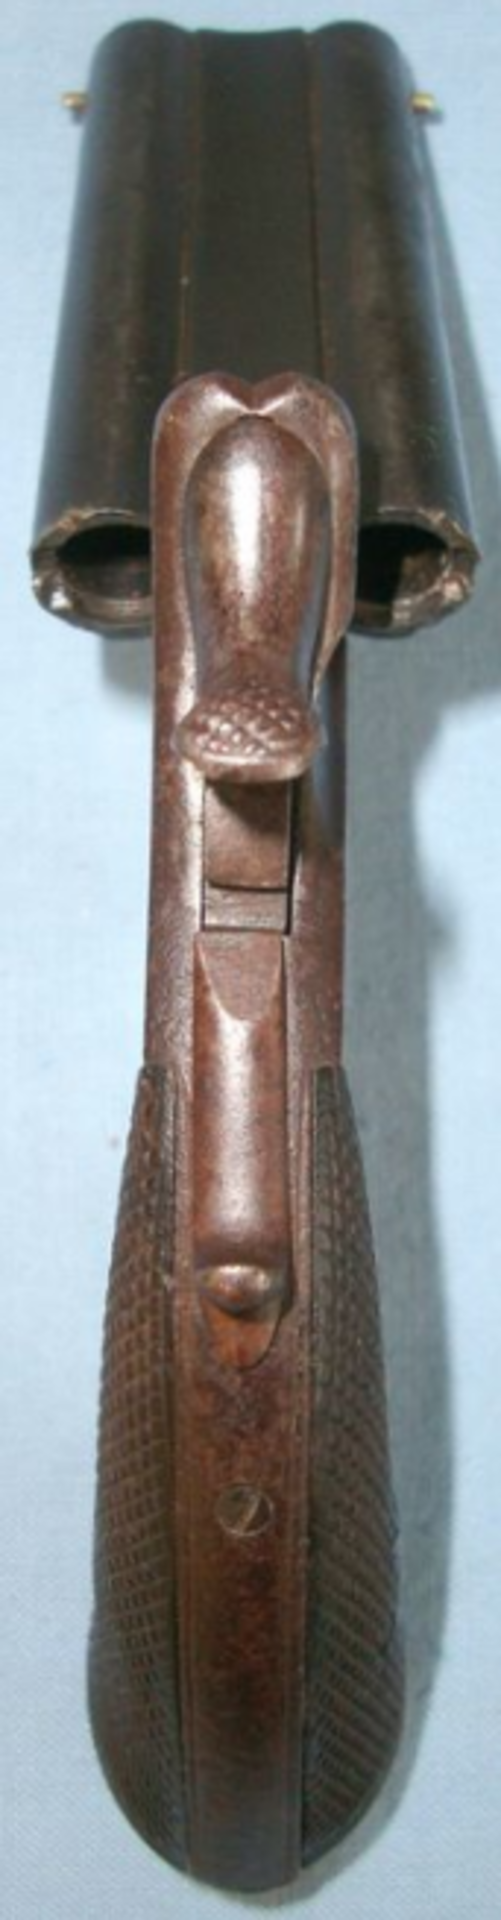 C1870 English James WoodwardNo.95 1863 Patent Double Swivel Barrel Over&Under.32” Calibre Derringer. - Image 3 of 3